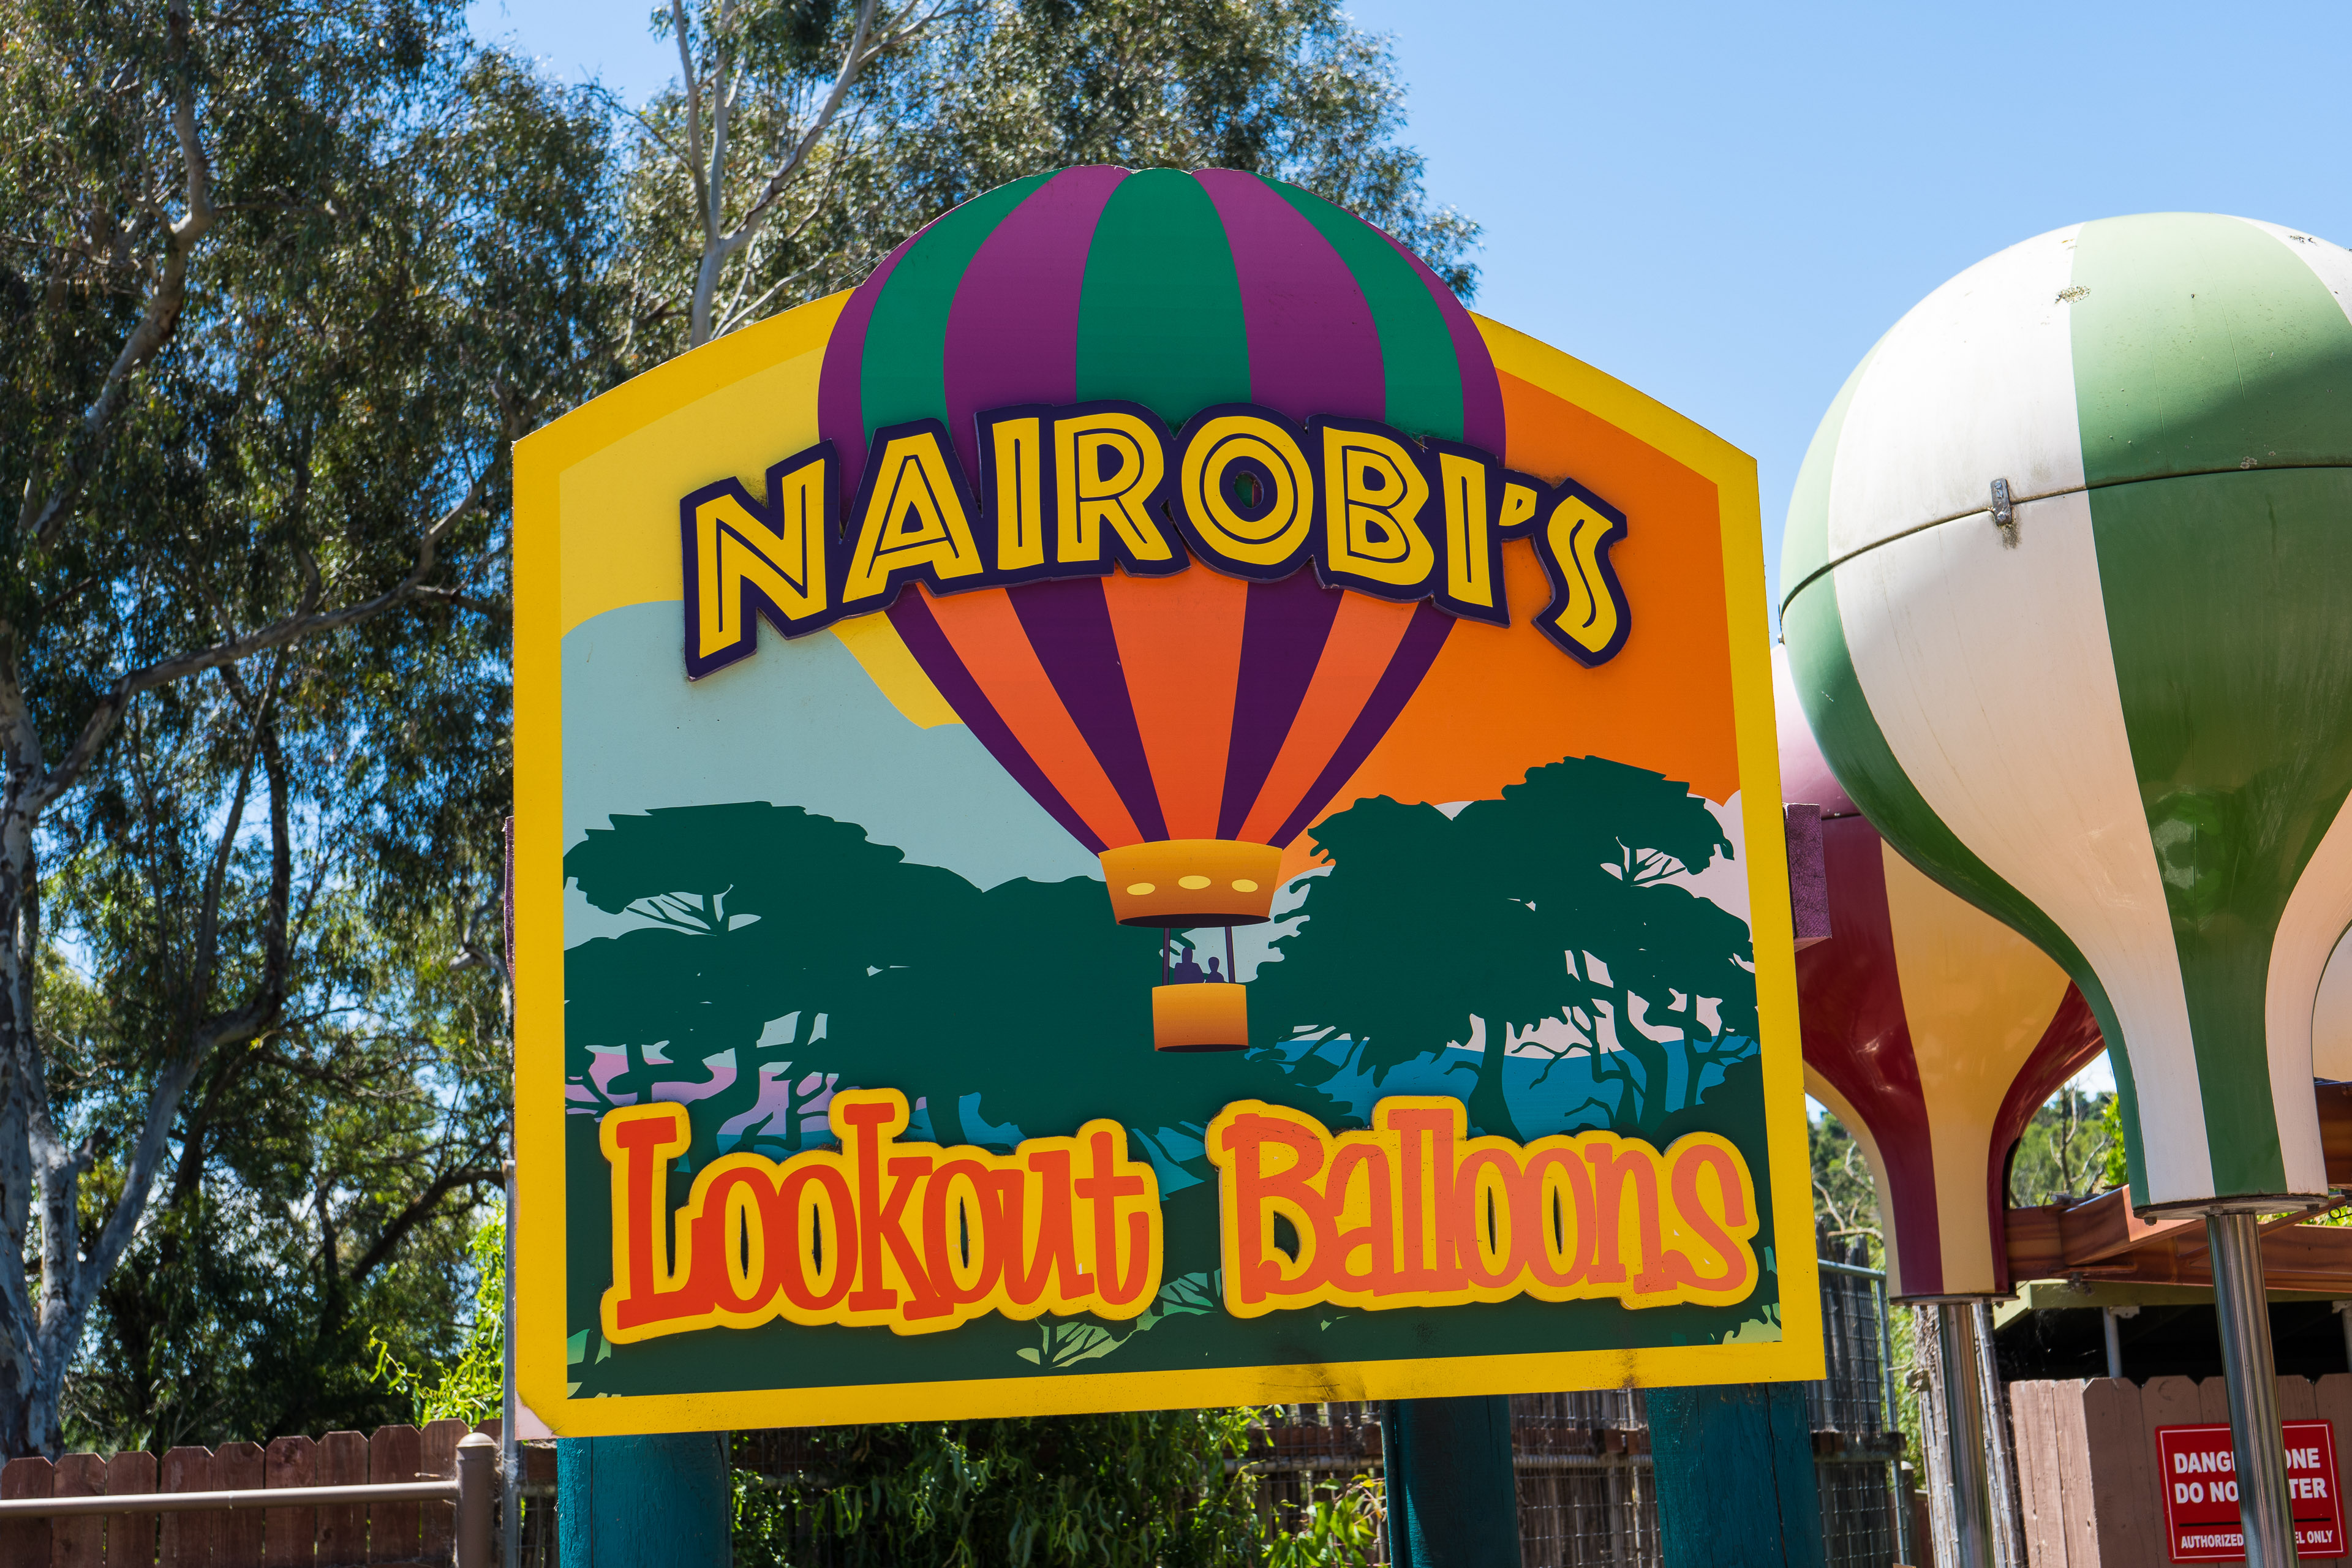 Nairobi's Look Out Balloons